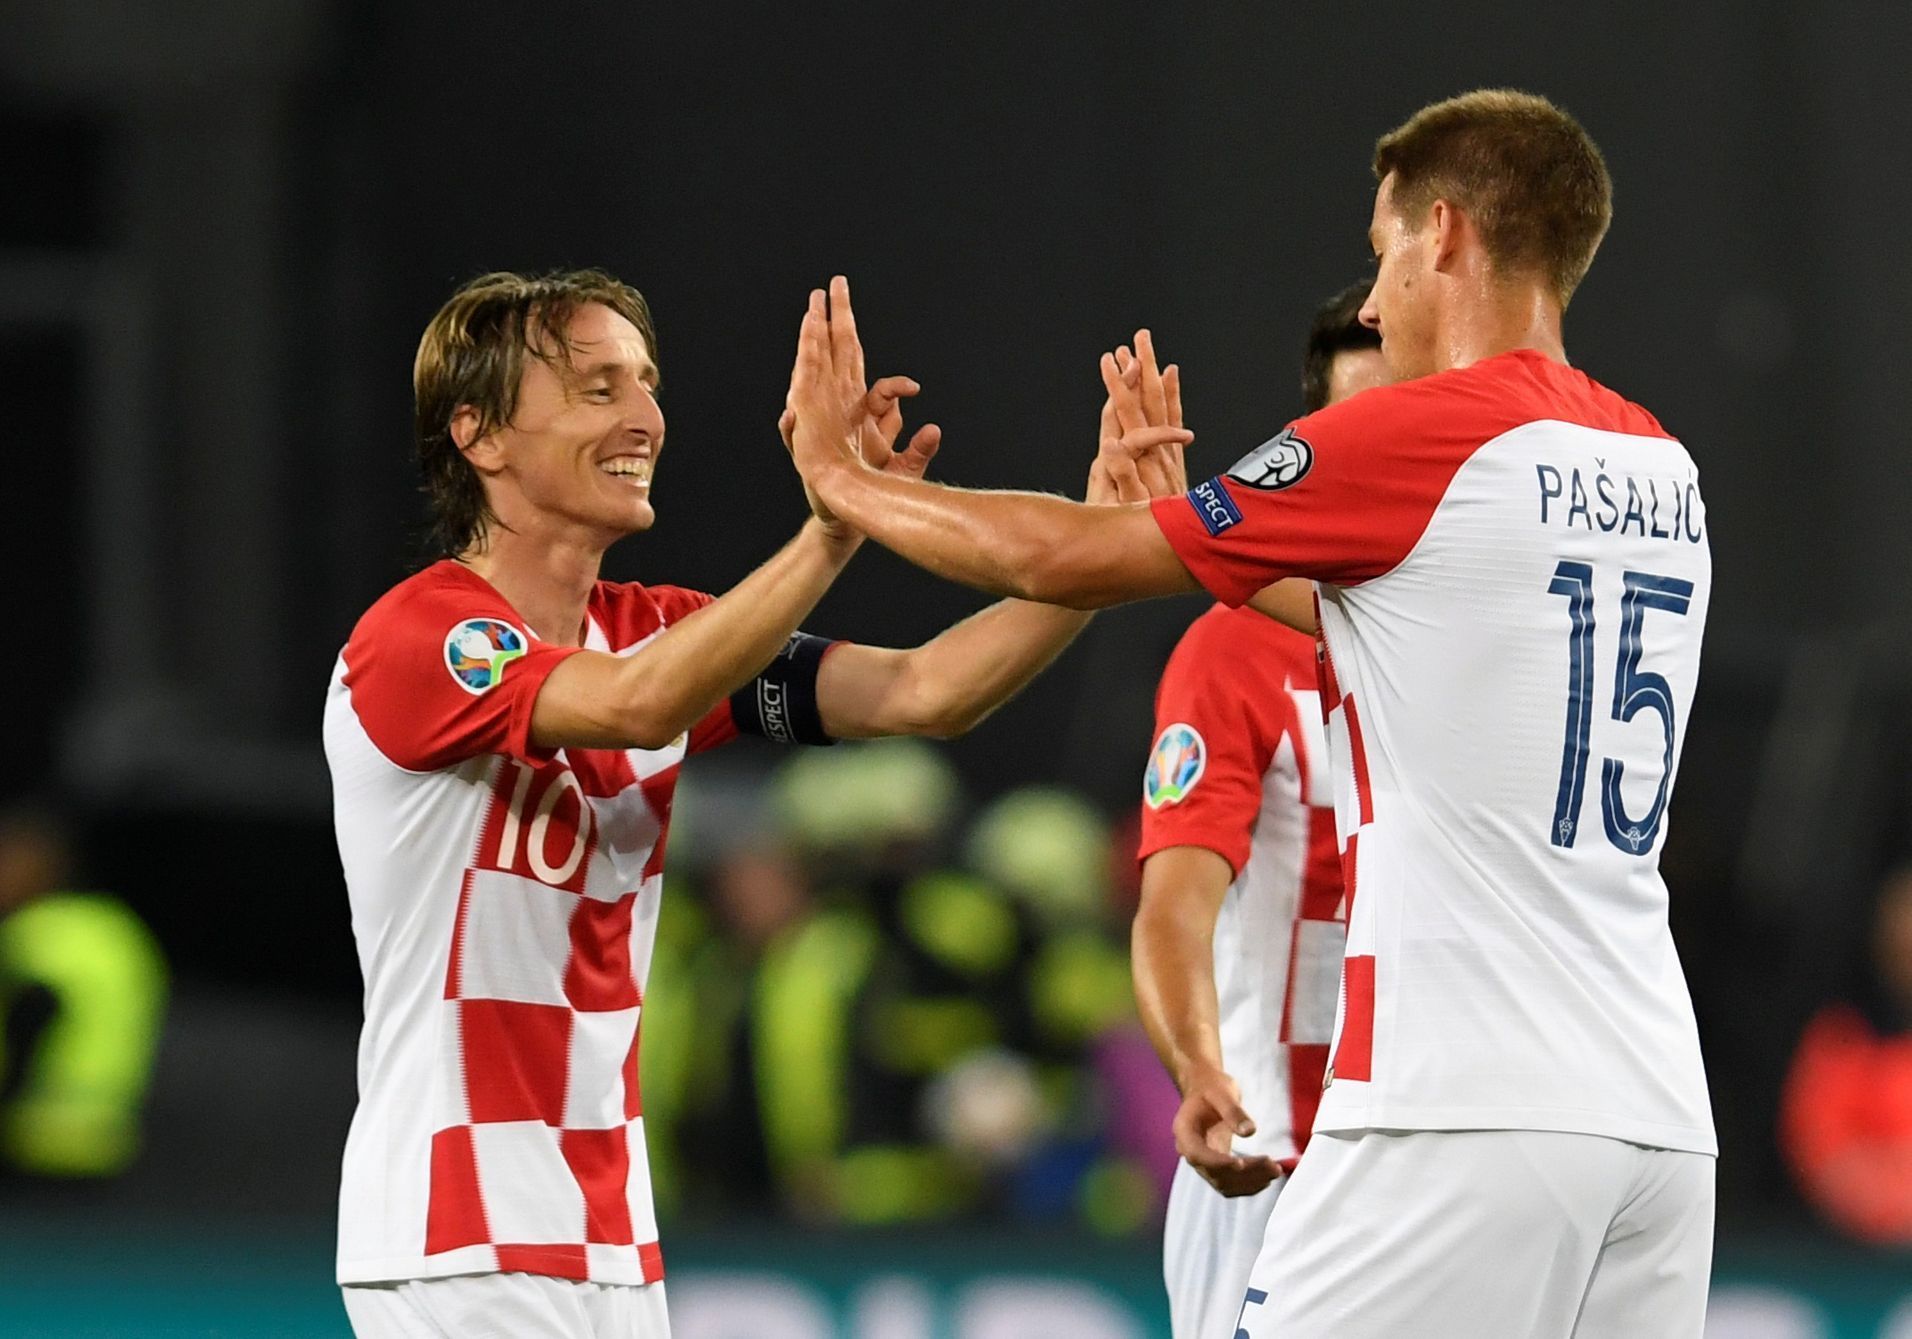 fotbal, kvalifikace ME 2020, Slovensko - Chorvatsko, Luka Modrič a Mario Pašalič